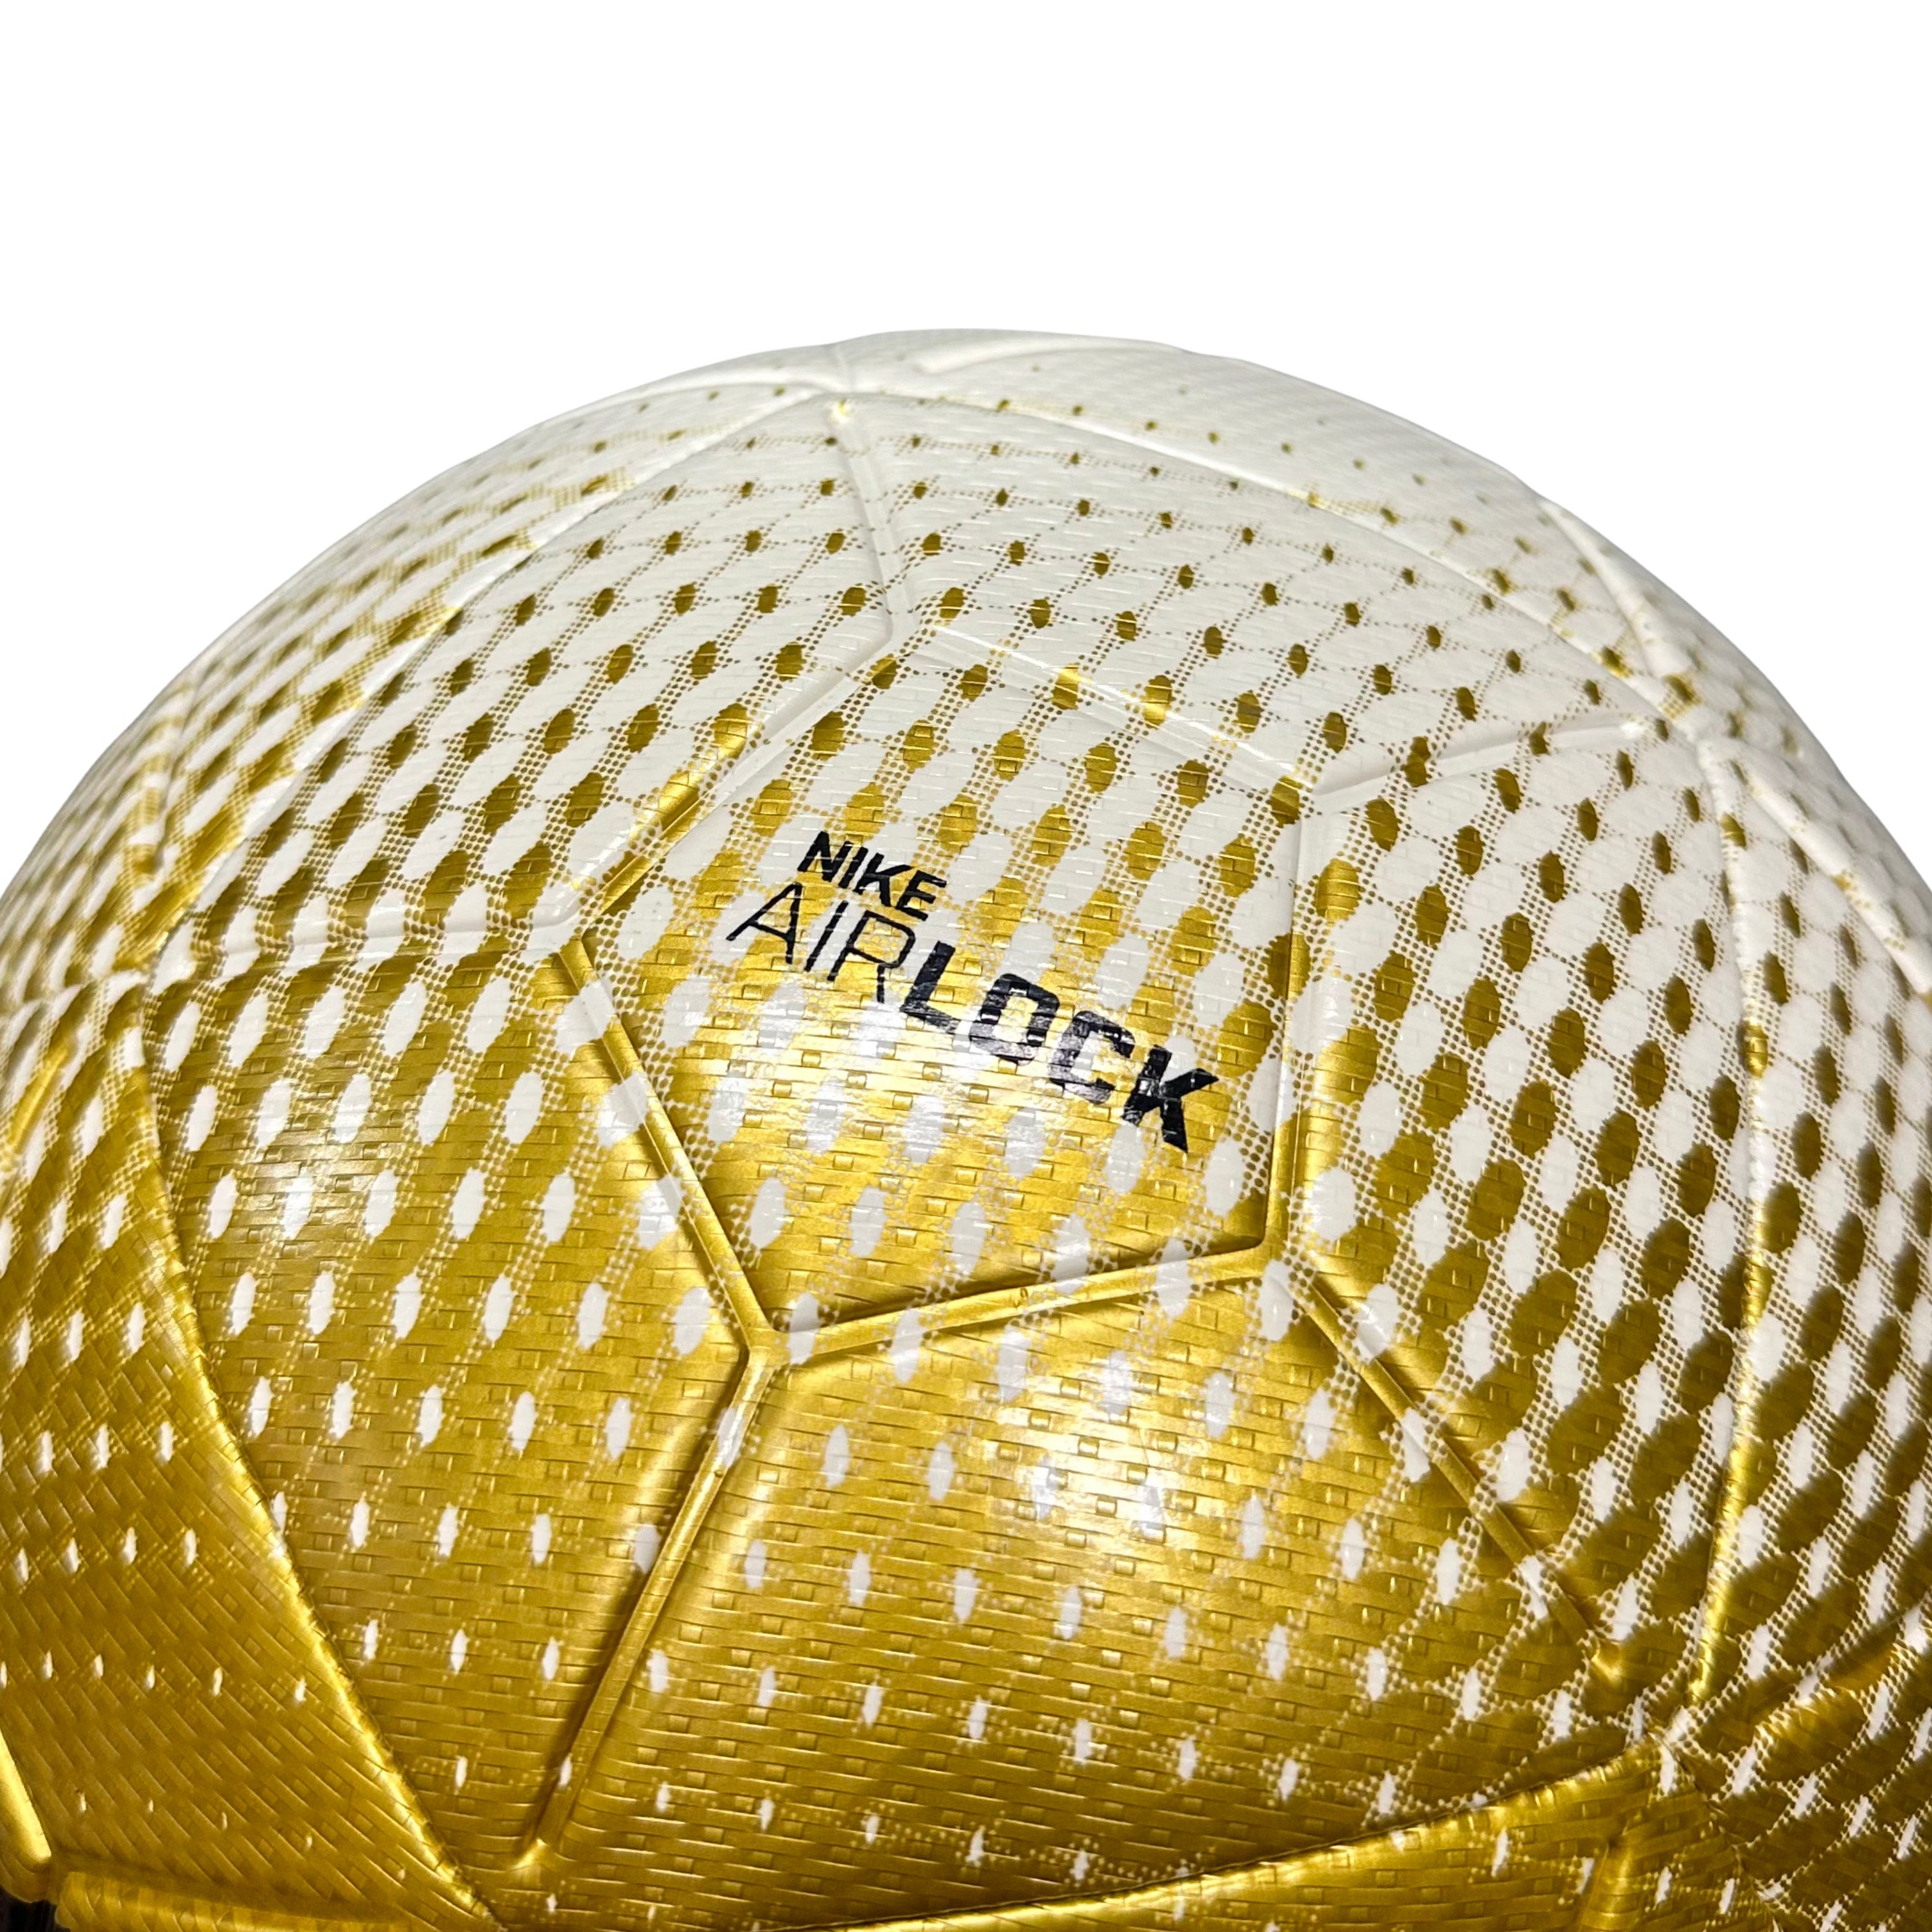 Nike Air lock Joga Bonito Ball ( 5 )